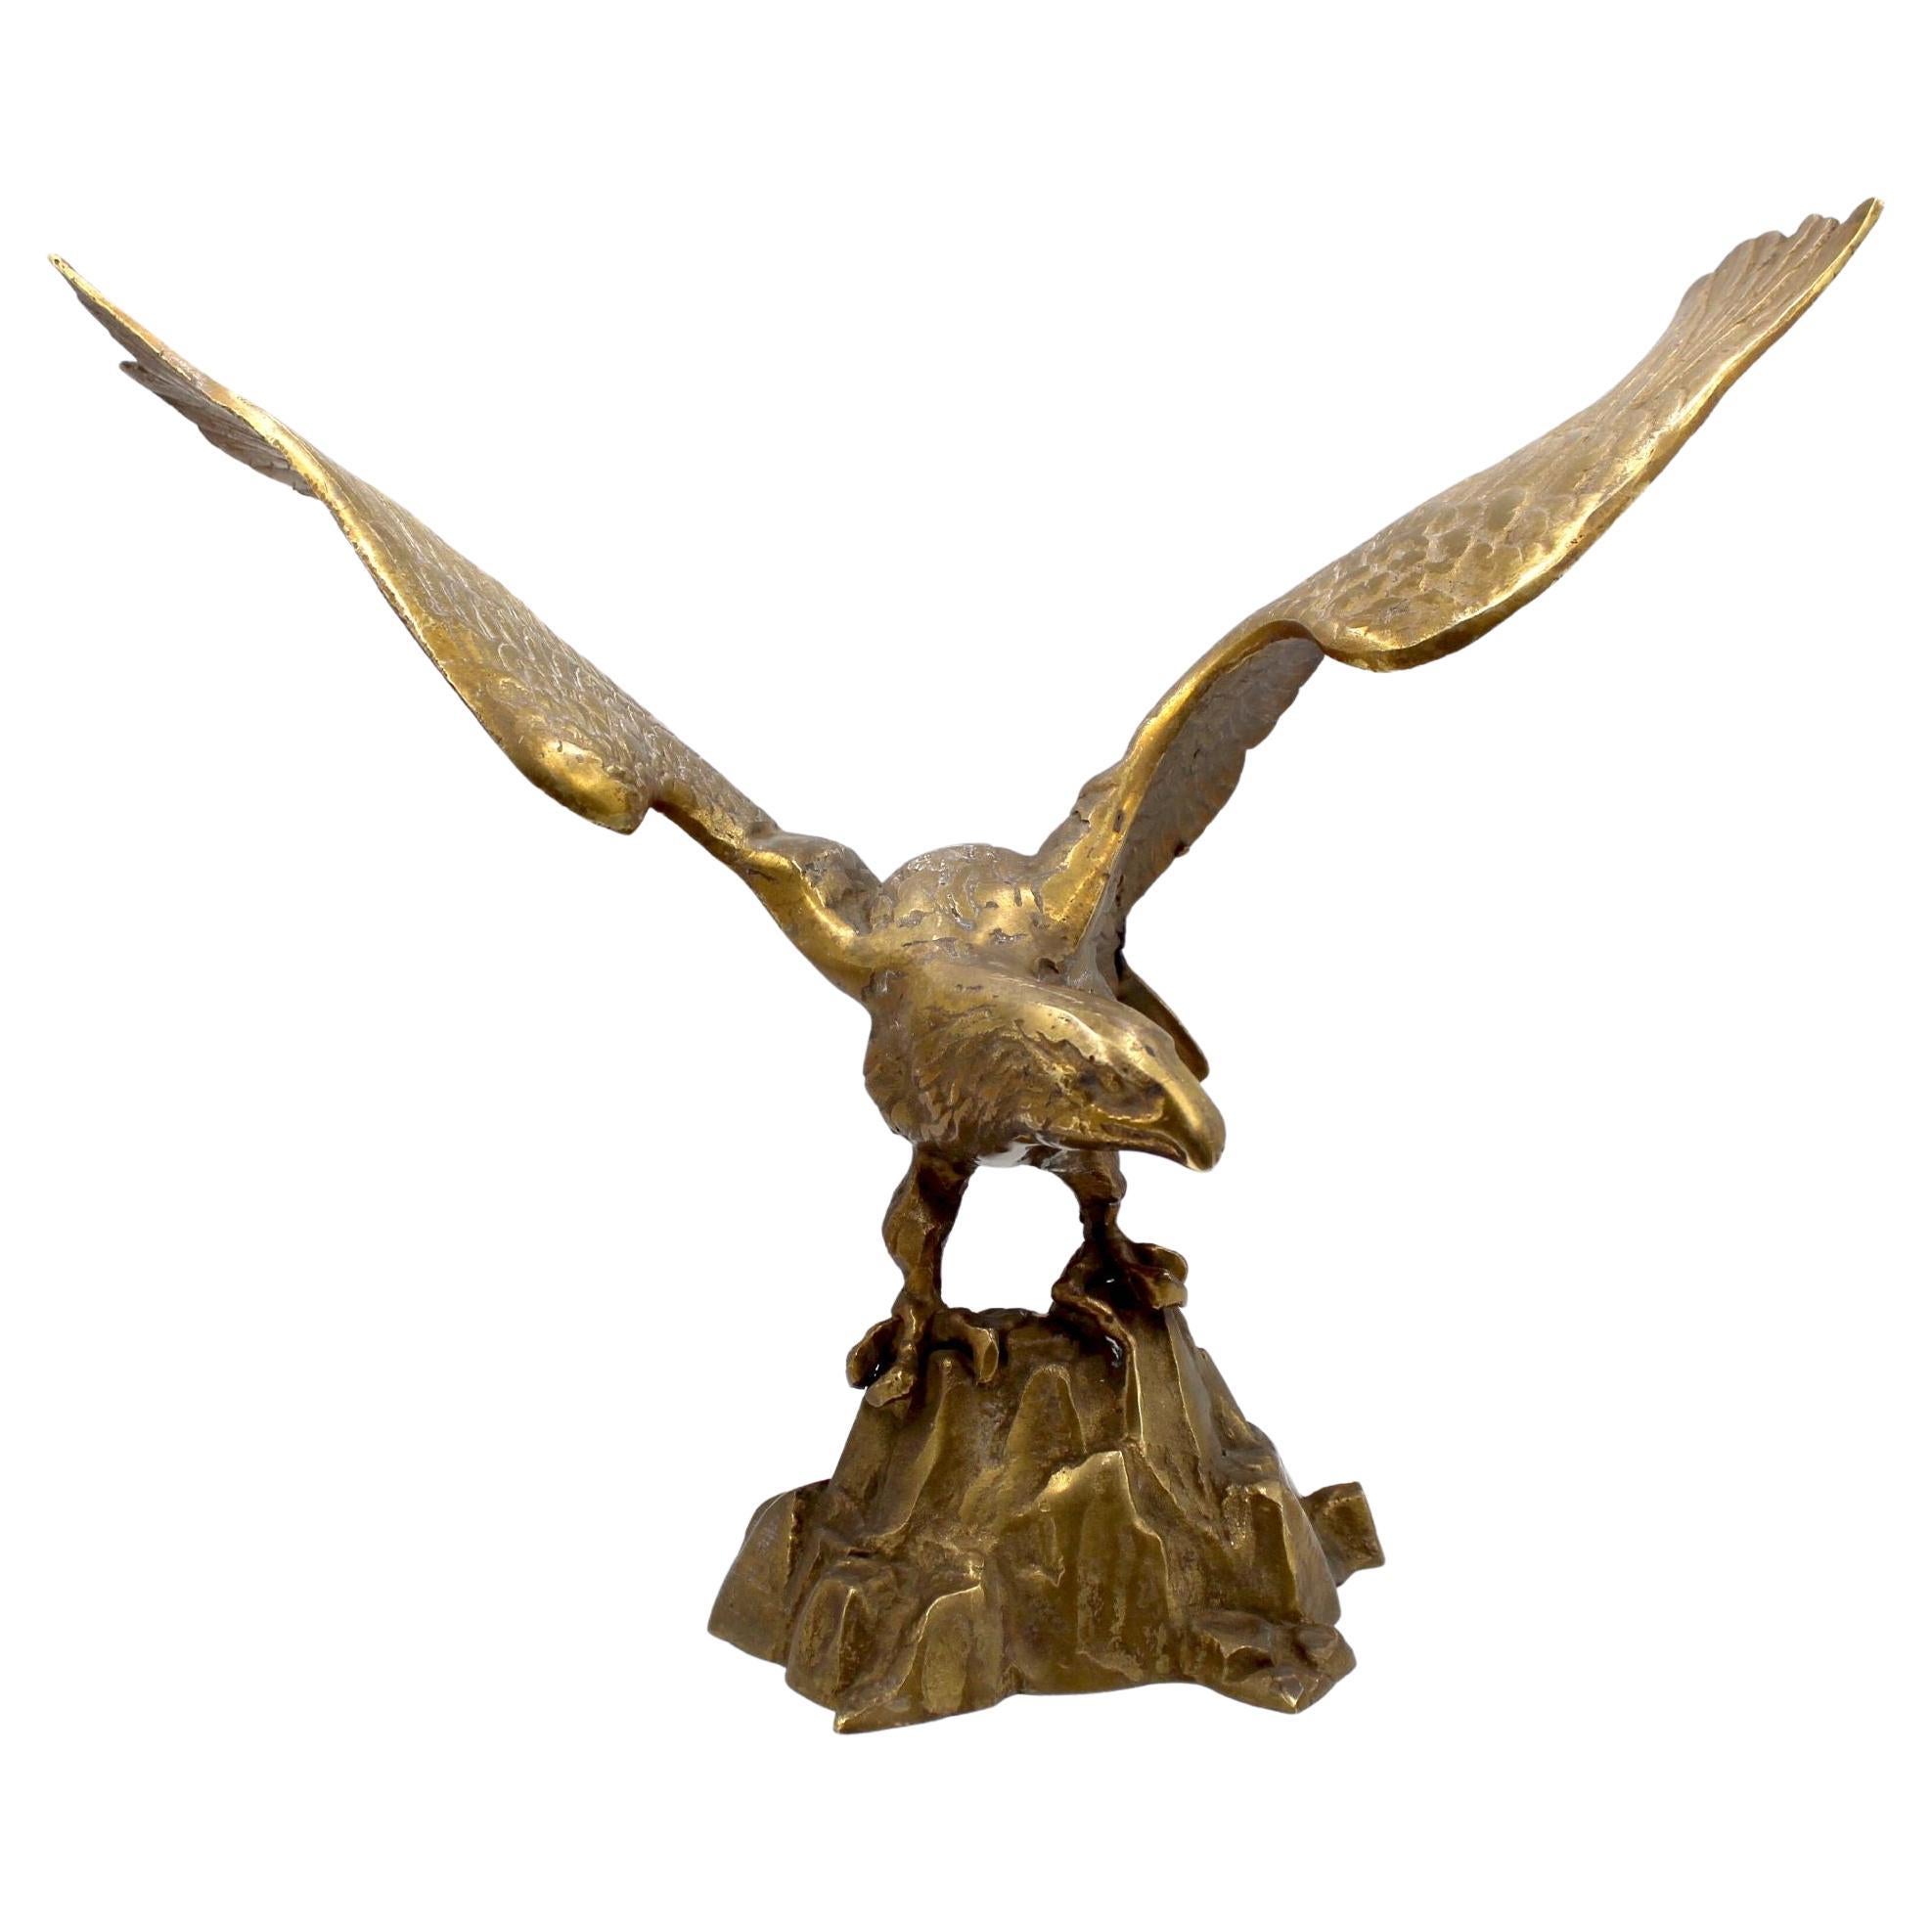 Vintage- Adler auf Felsen aus Messing, ca. 1960er Jahre